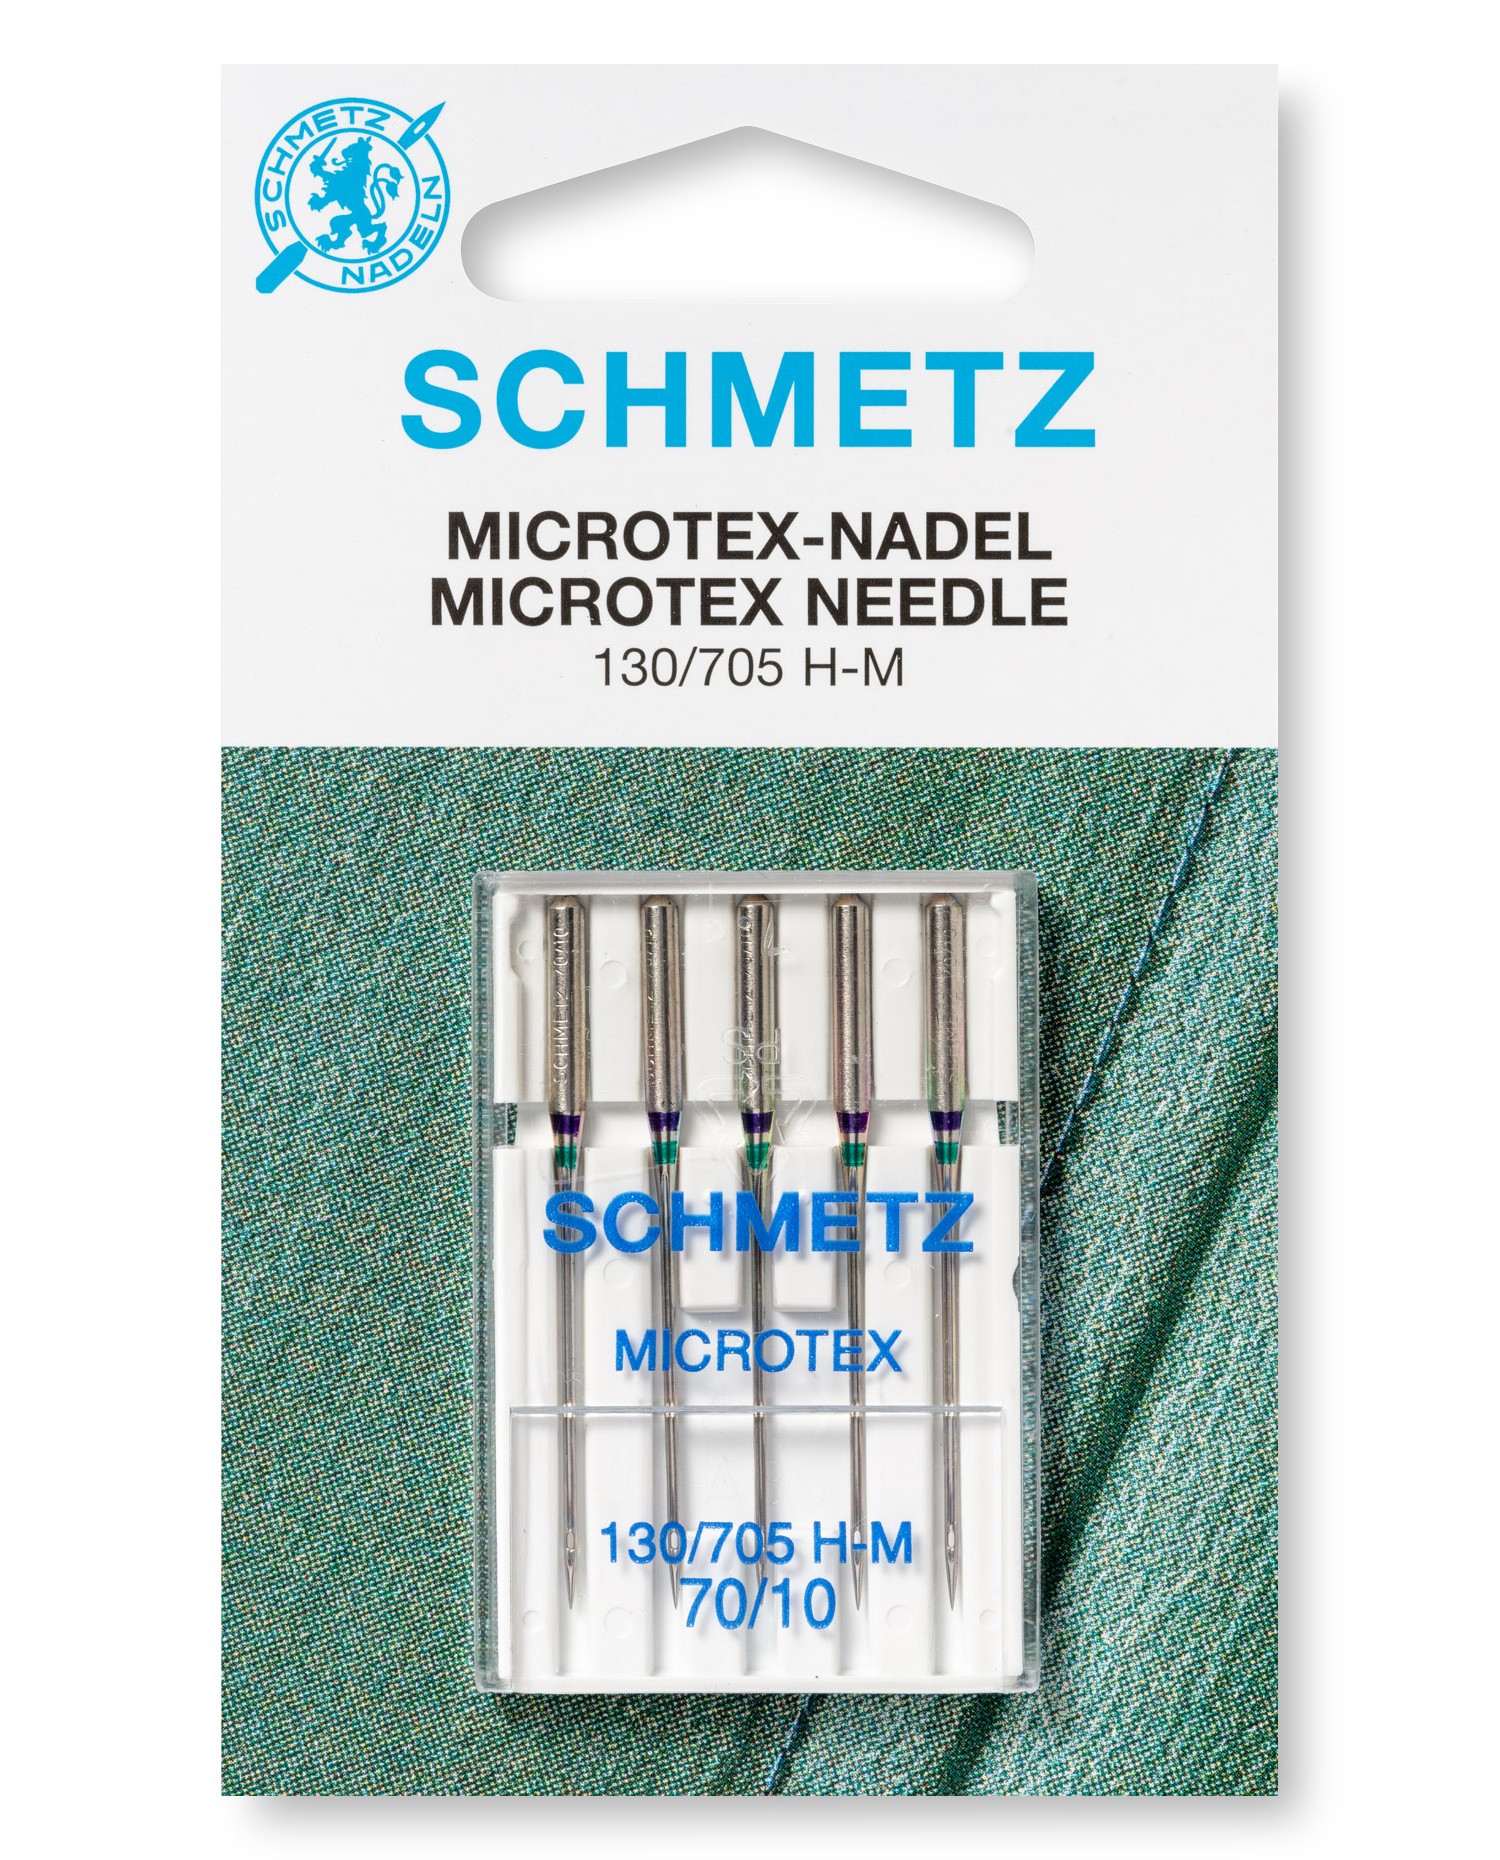 Schmetz Microtex